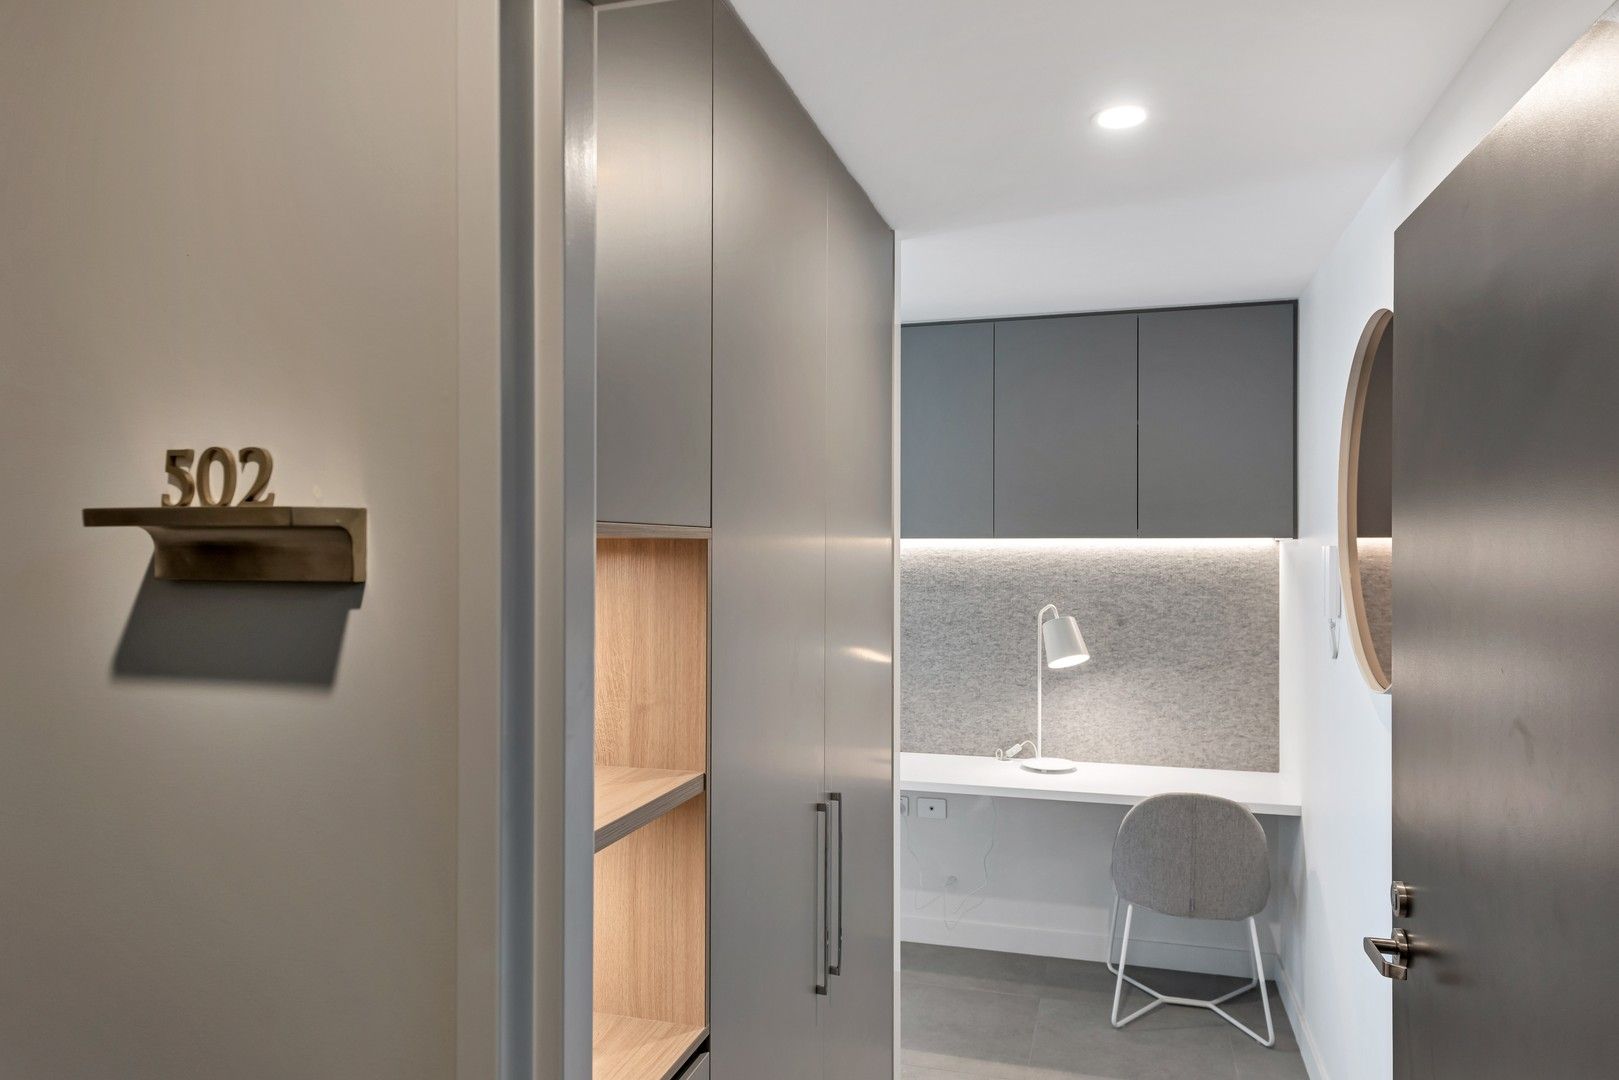 2 bedrooms Apartment / Unit / Flat in 502/5 Waterloo Street EAST BRISBANE QLD, 4169